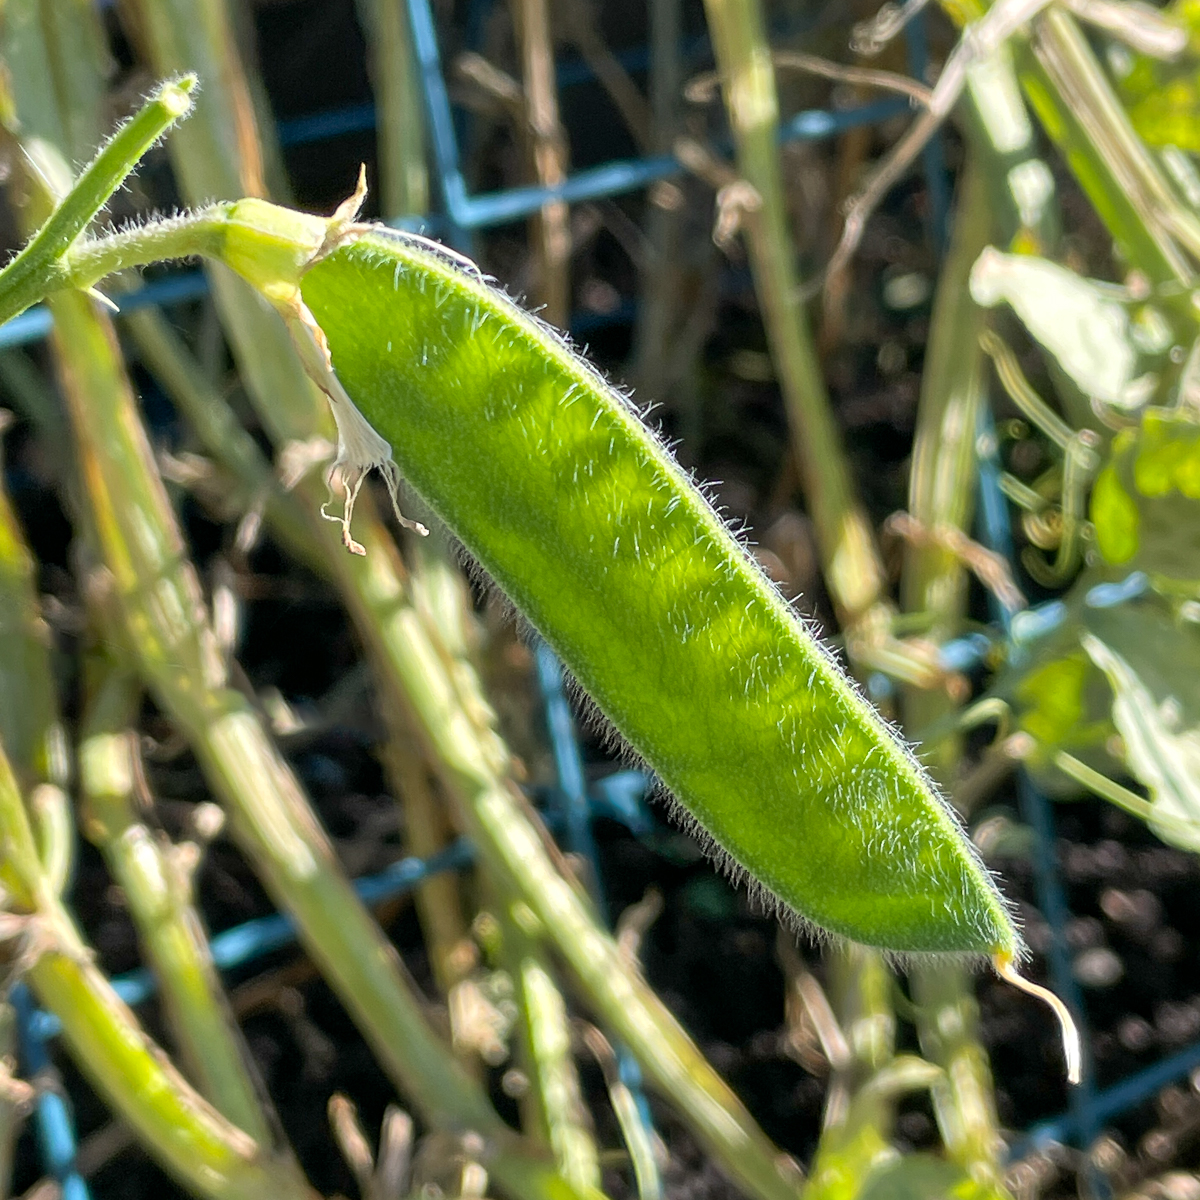 immature sweet pea seed pod